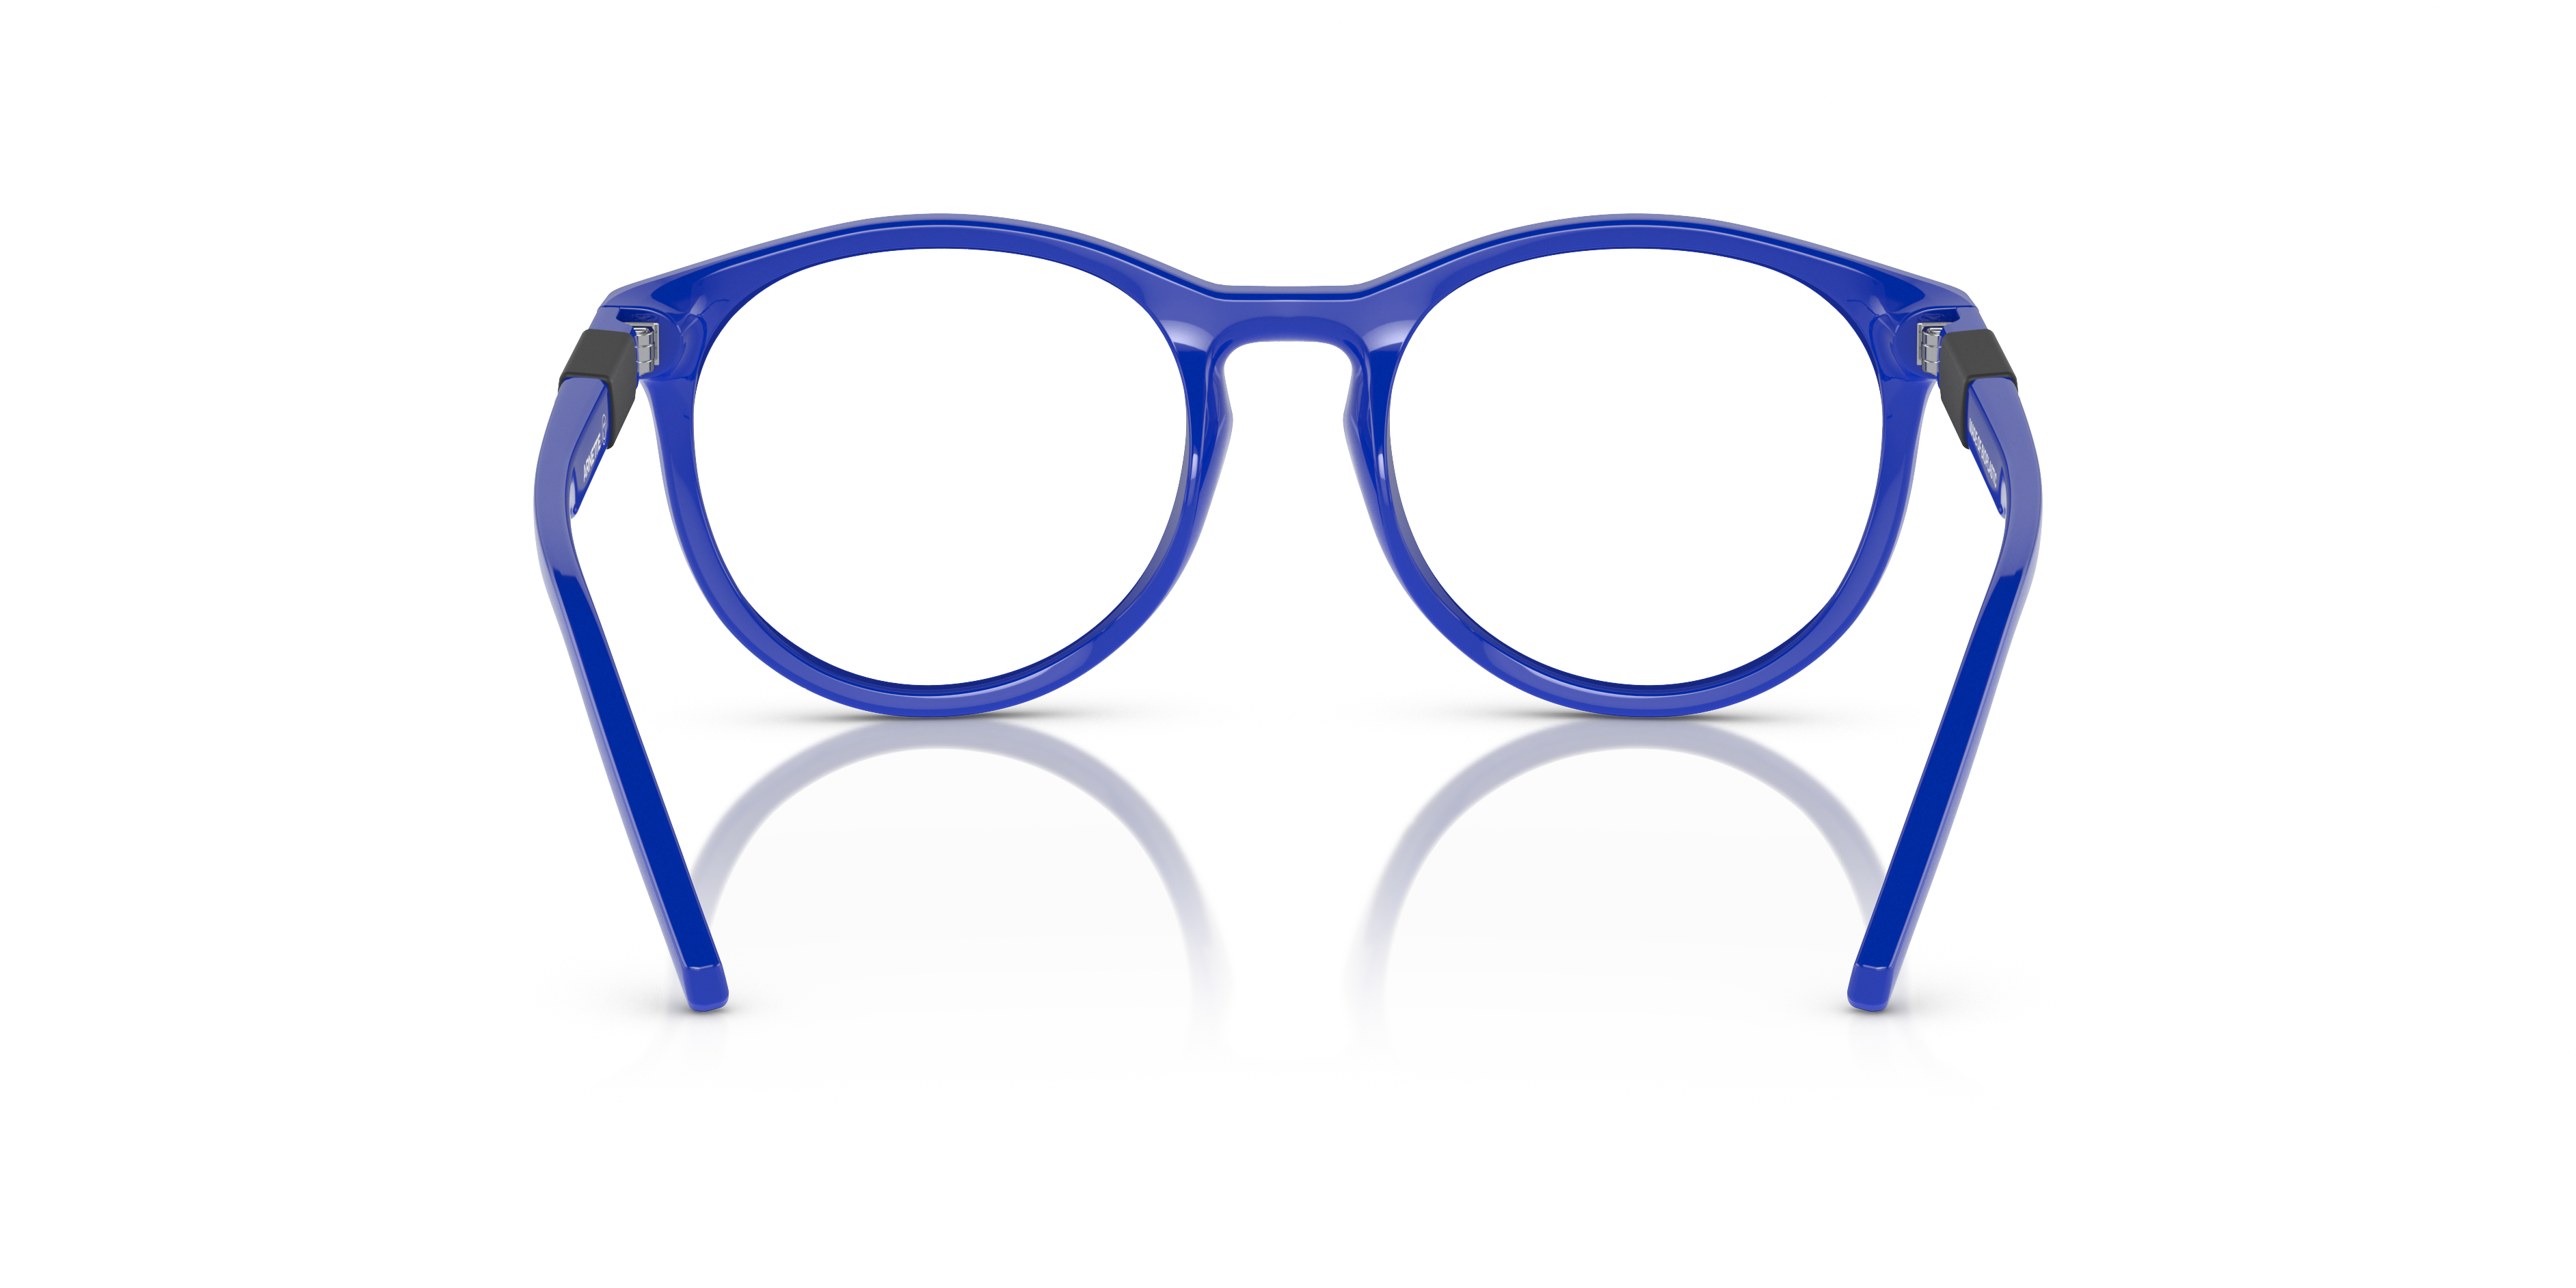 Detail02 Arnette AN 7225 Children's Glasses Transparent / Transparent, Clear